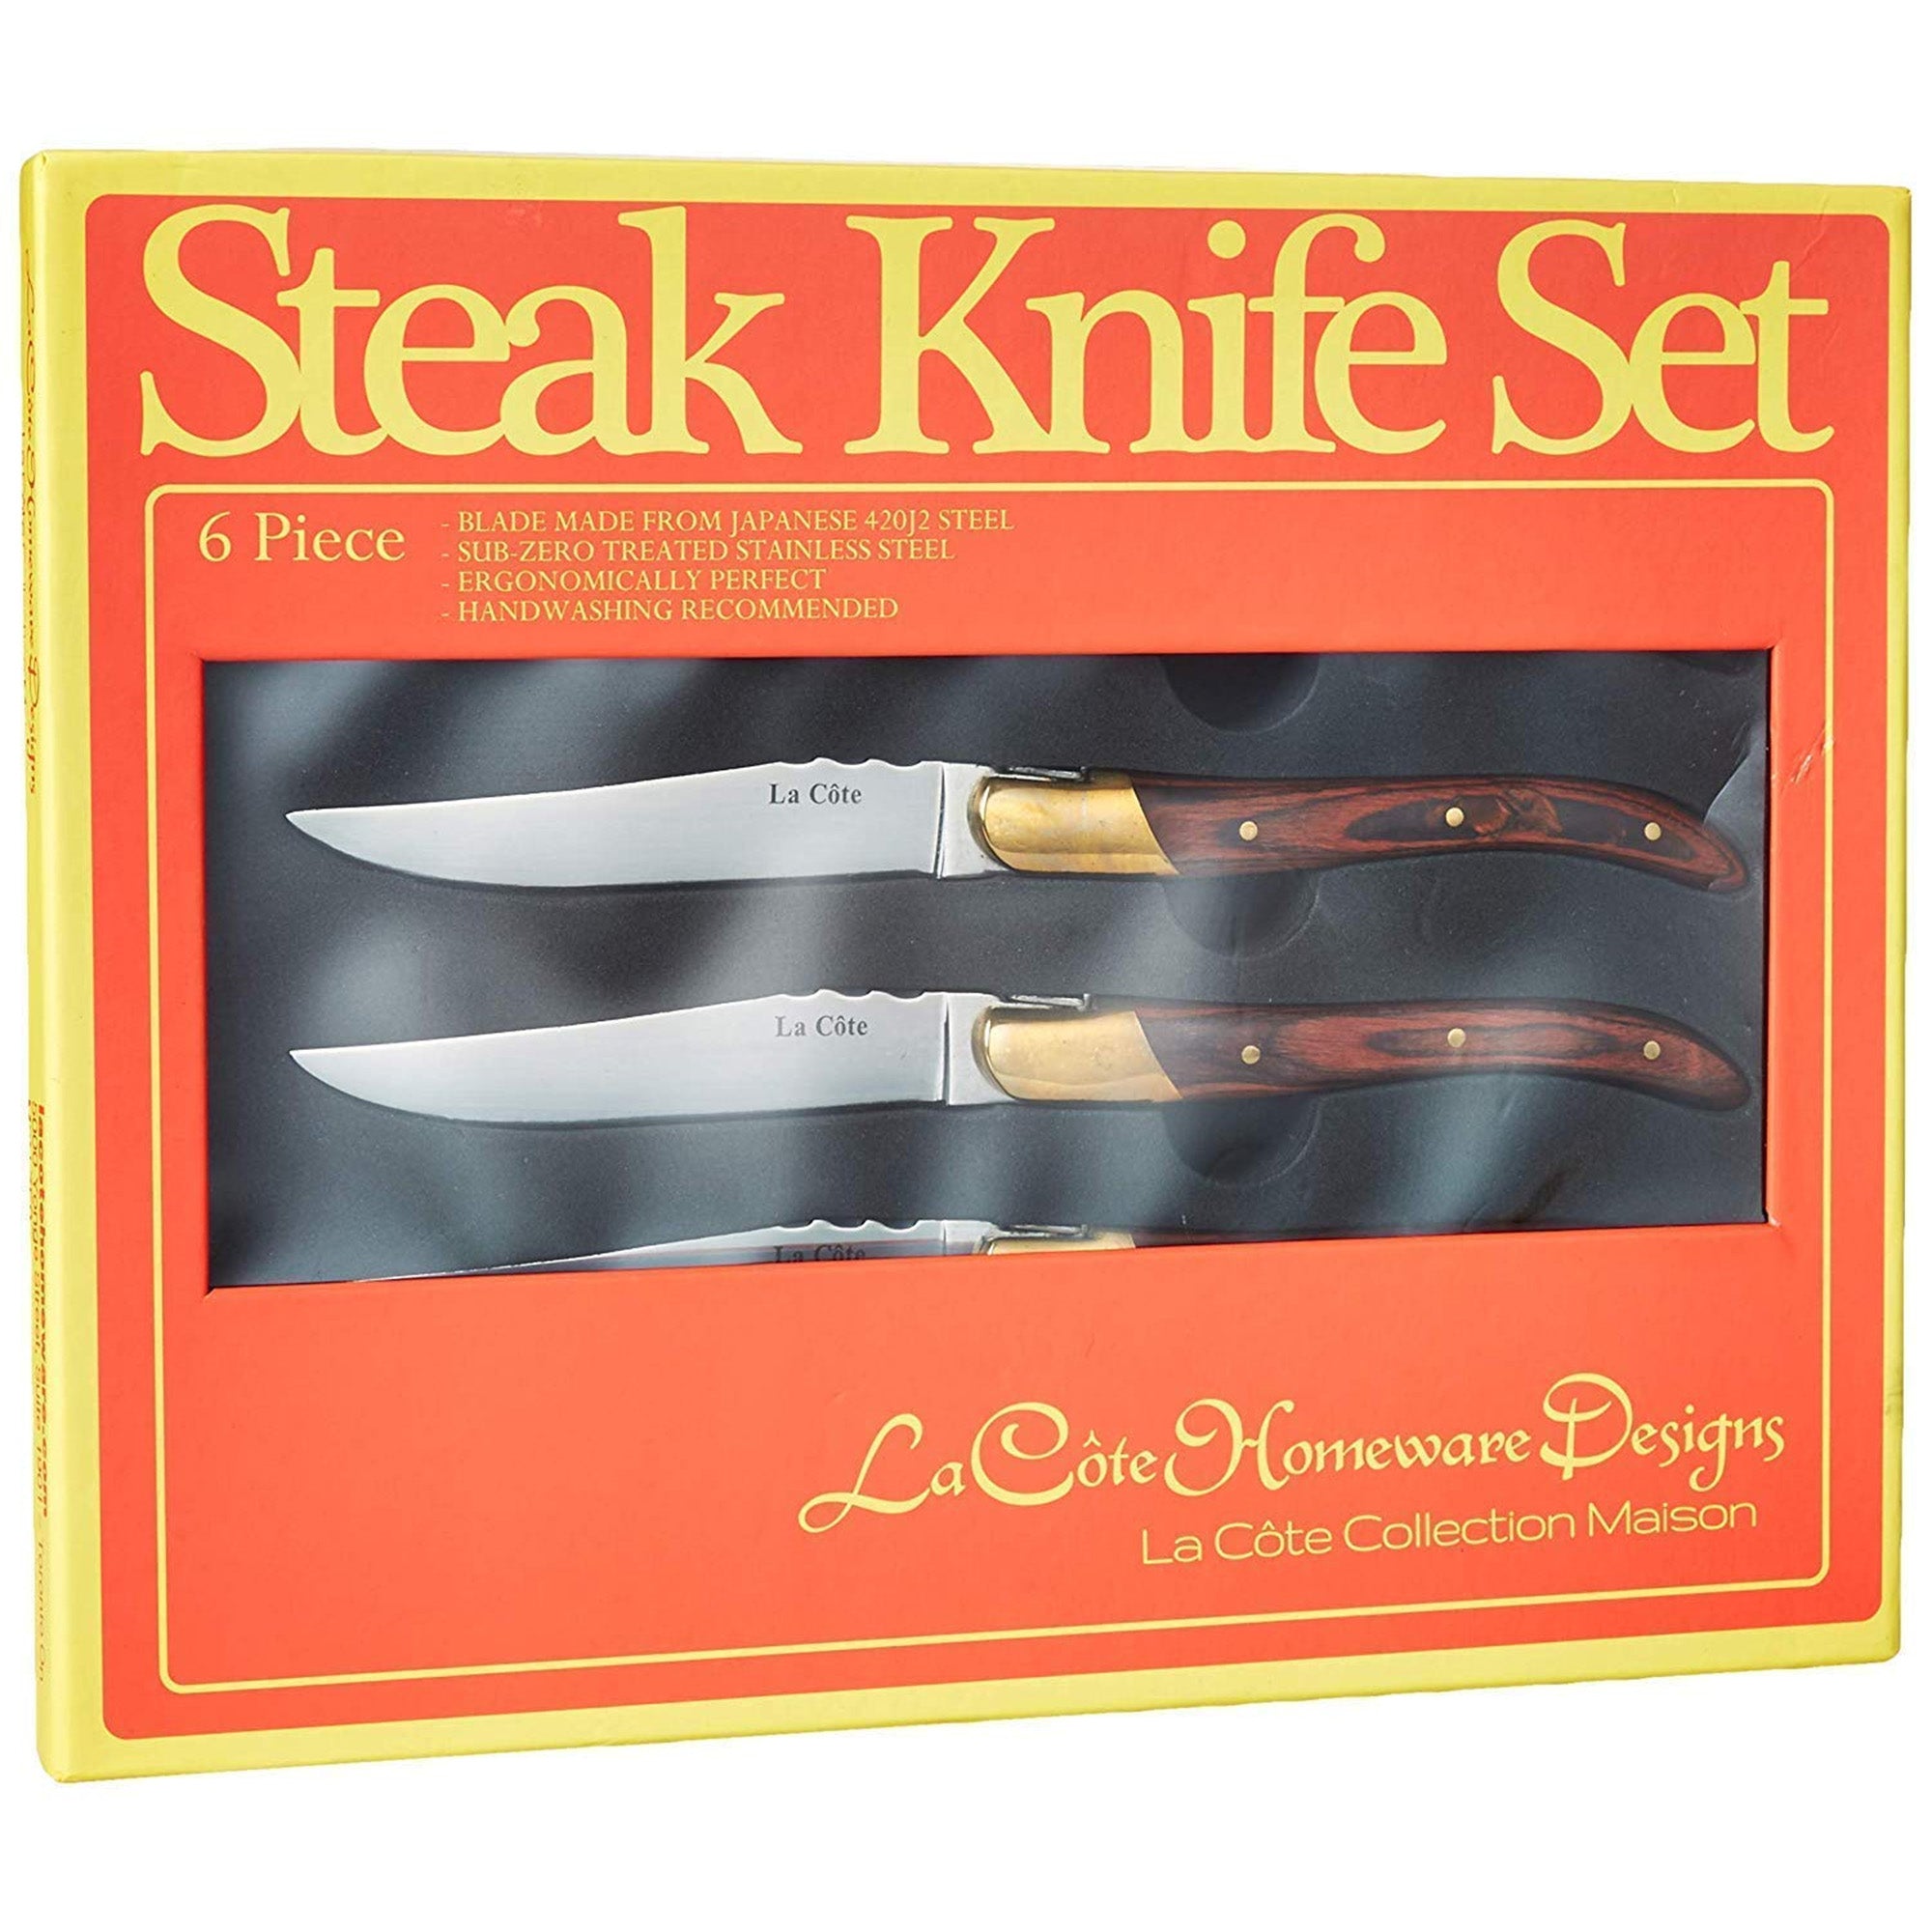 La Cote 6 Piece Pakka Wood Cupreous Steak Knives Set Japanese Stainless Steel Wood Handle In Gift Box (6 PC Steak Knife Set - Rose)